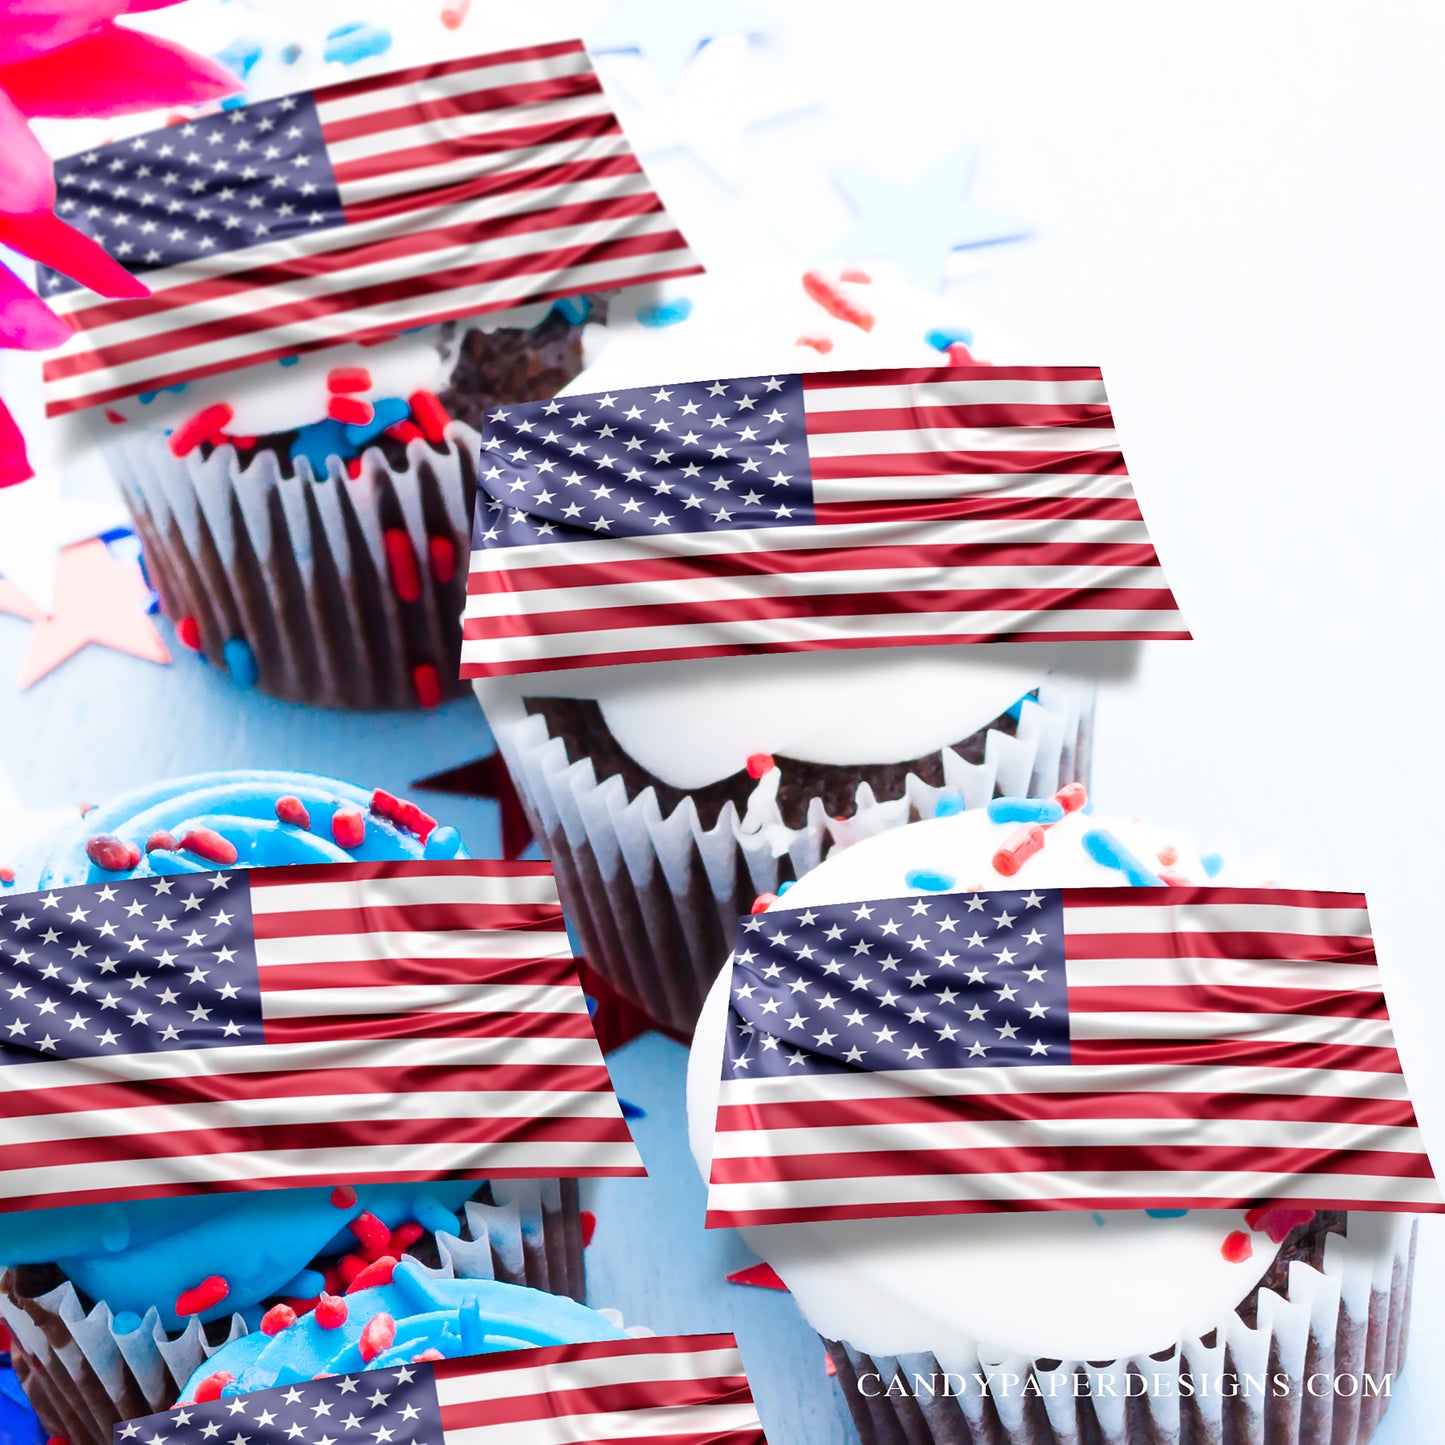 21 Edible American Flags Edible Cupcake Toppers